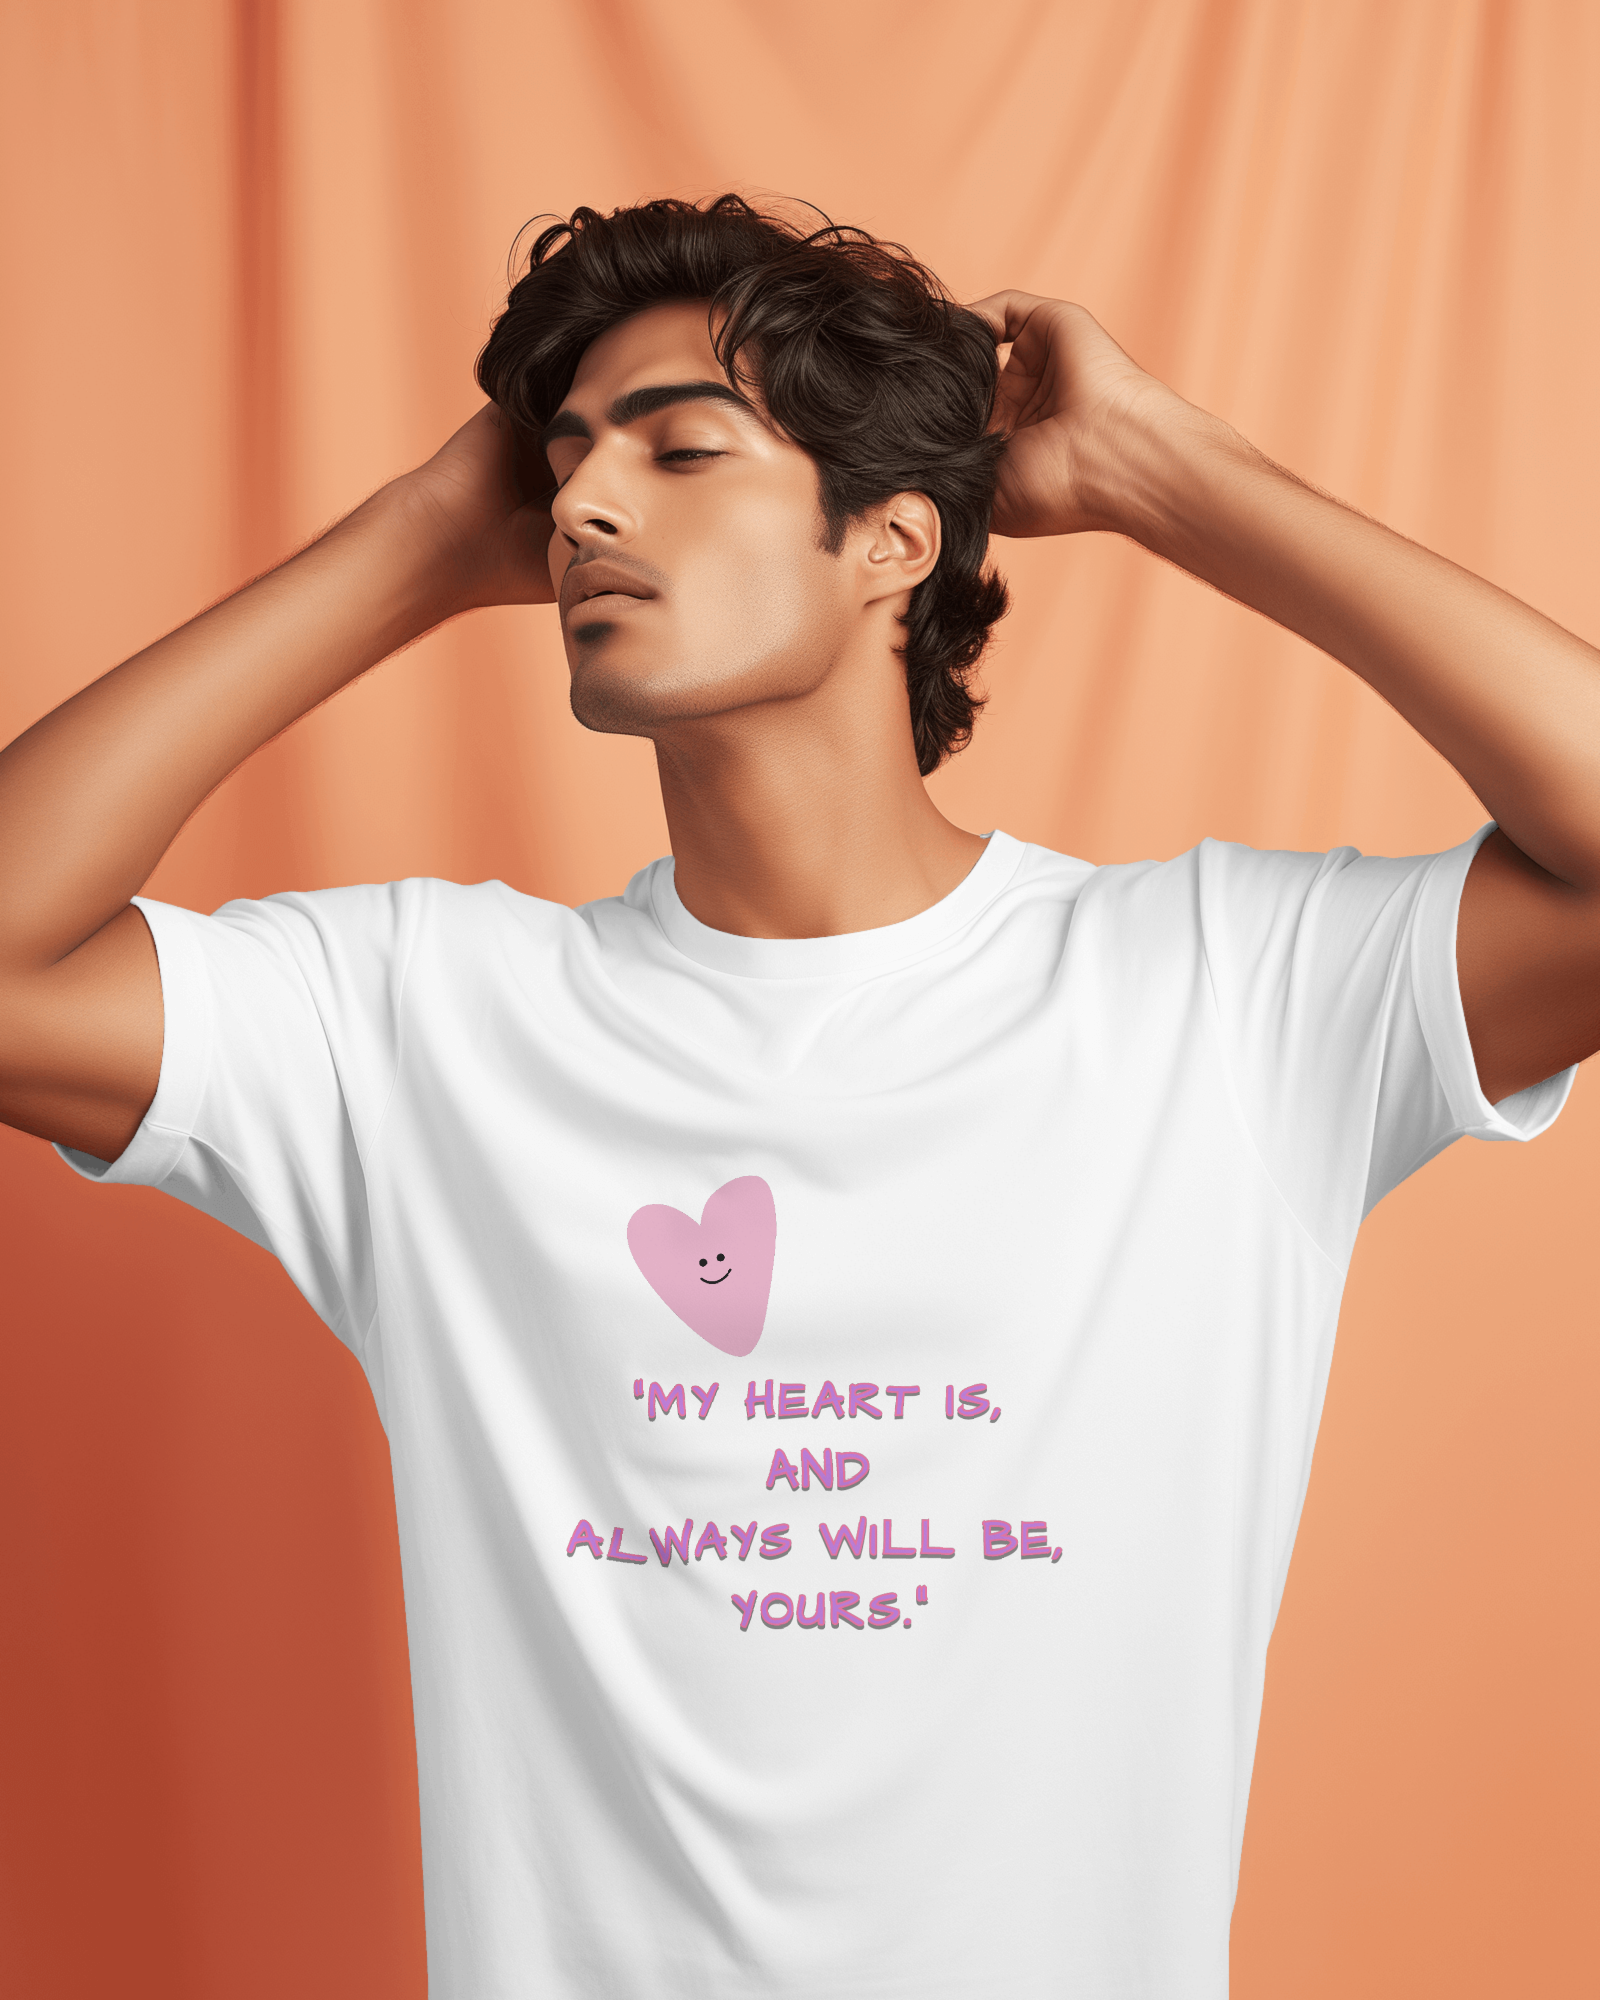 Romantic Tshirt Print For Young 